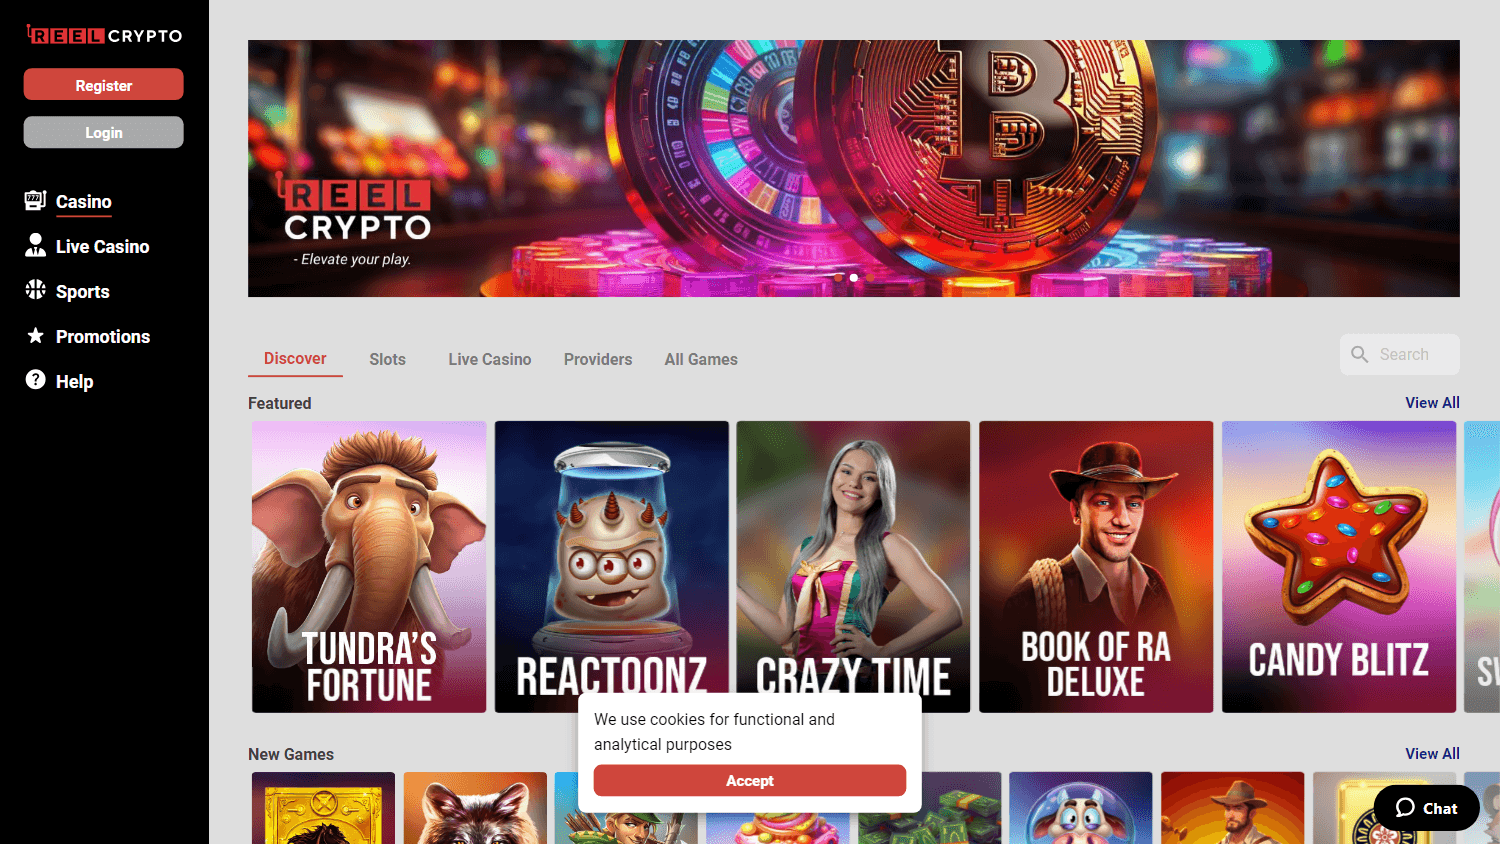 reel_crypto_casino_homepage_desktop